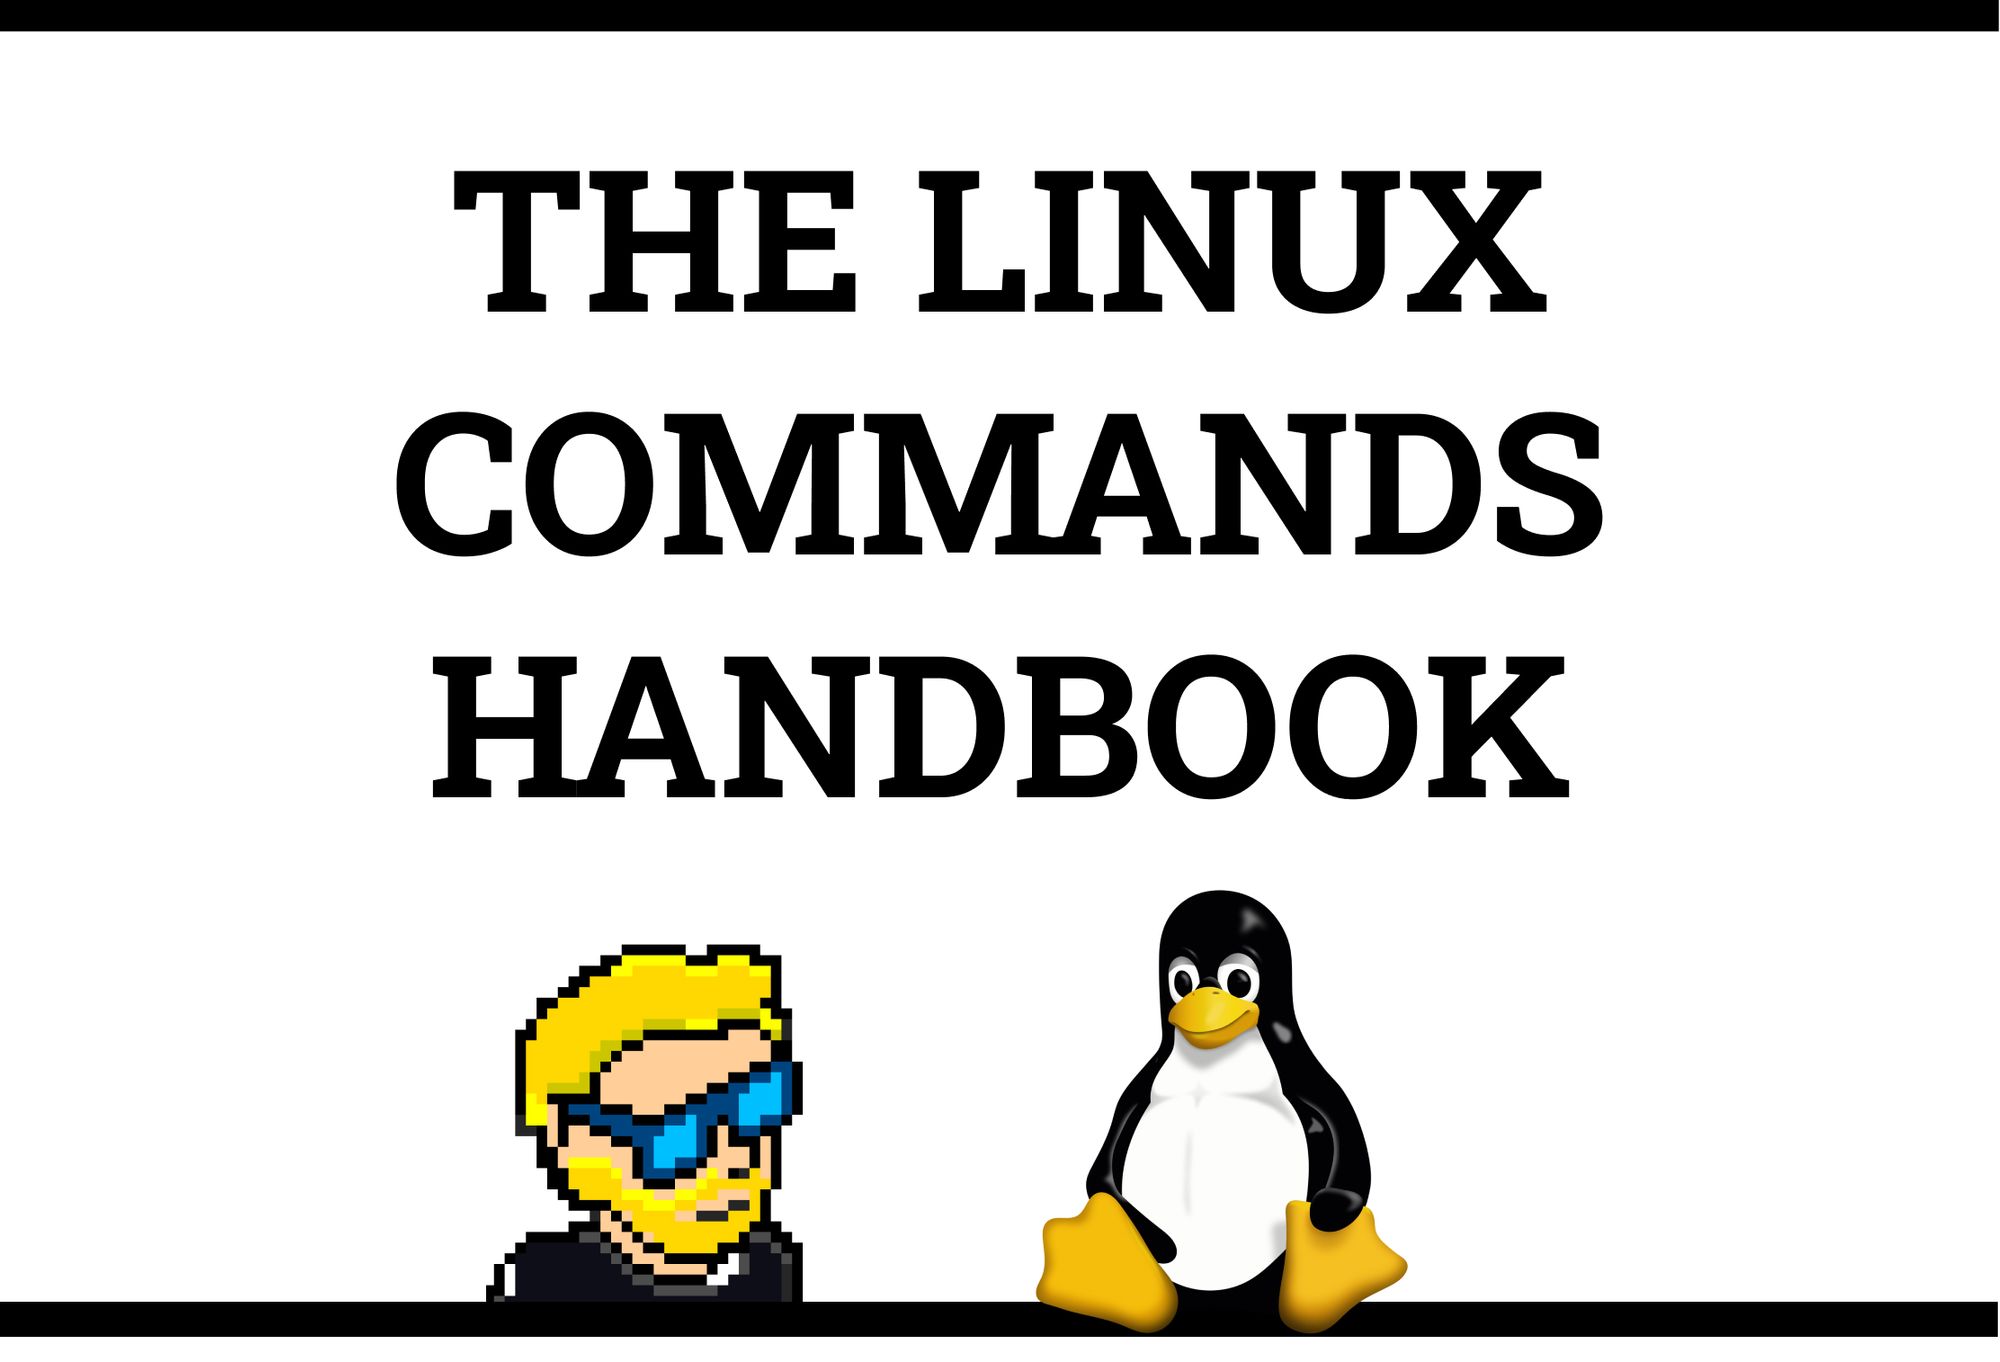 The Linux Command Handbook